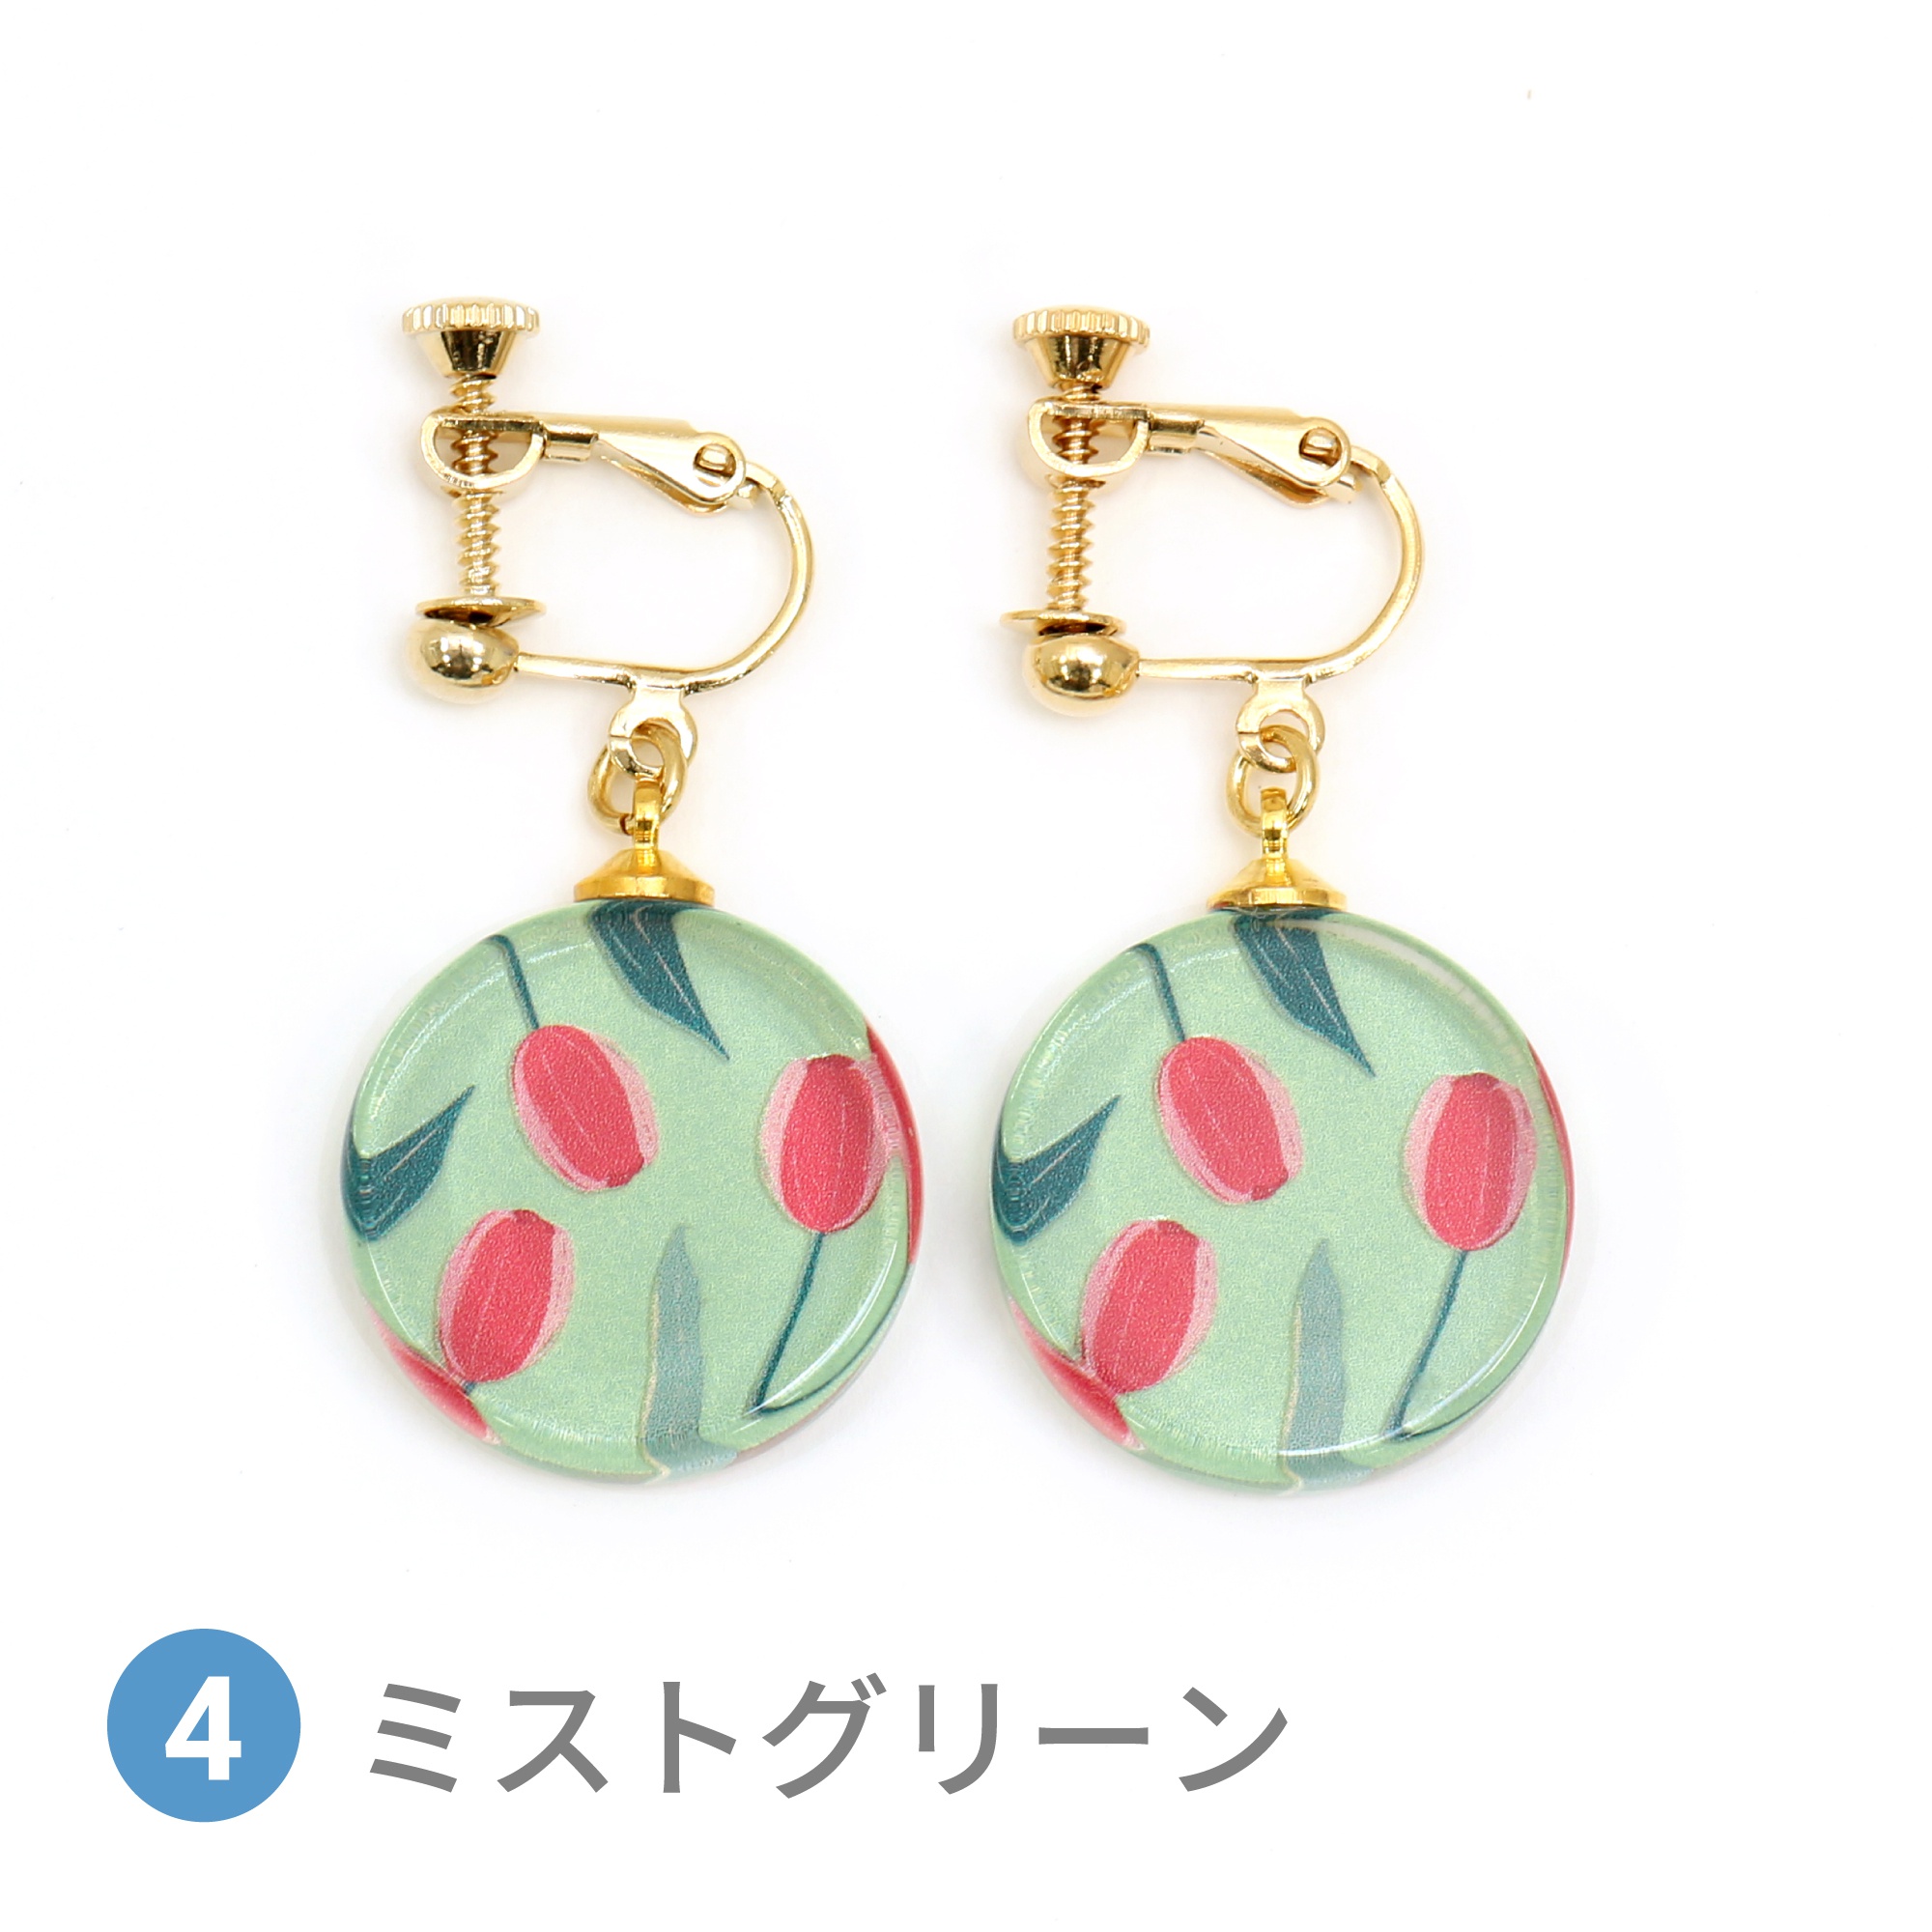 Glass accessories Earring TULIP mistgreen round shape